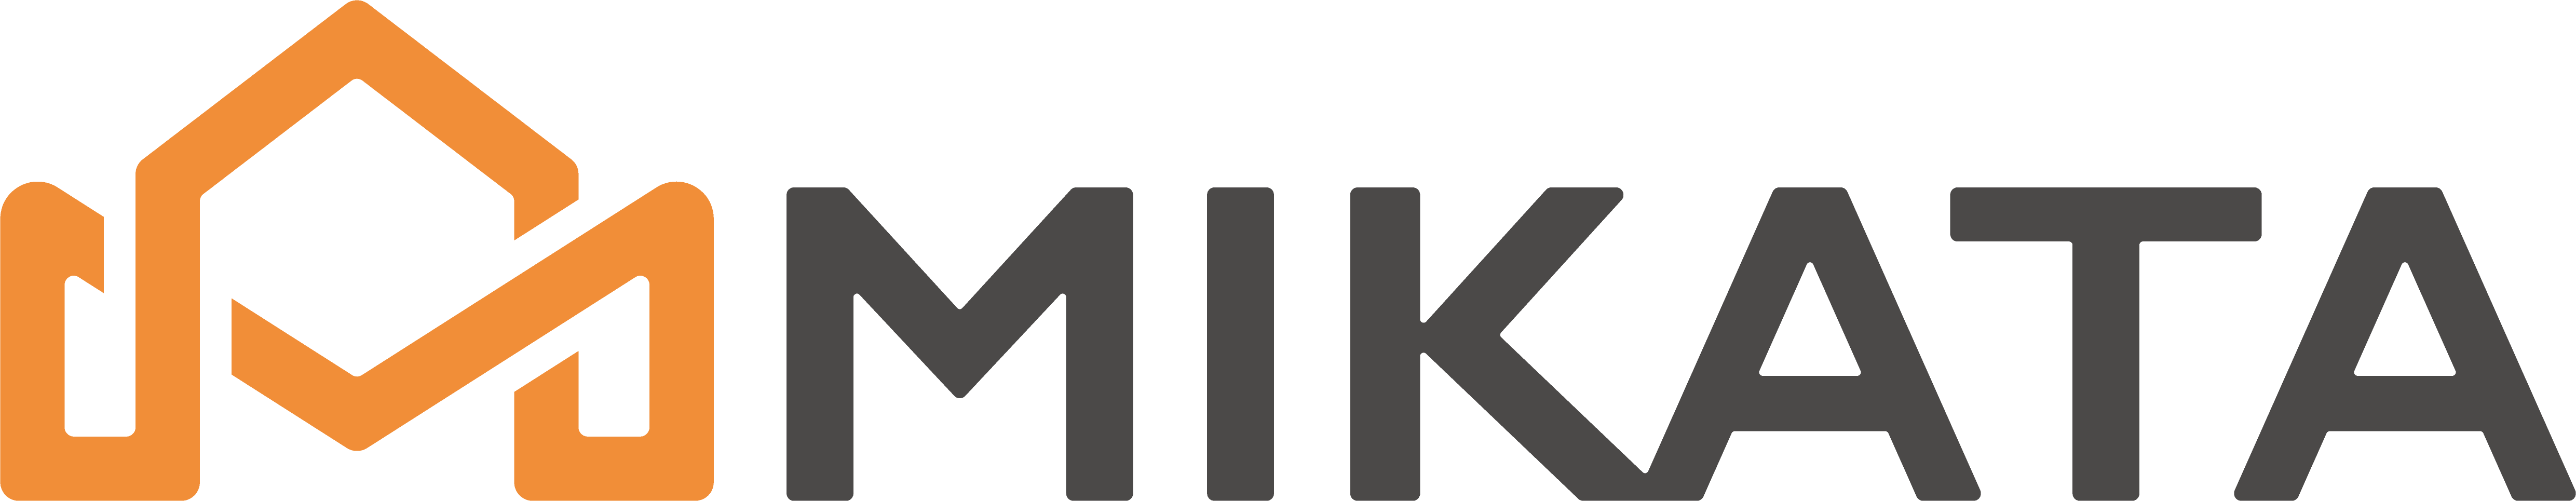 mikata_logo_FIX_logotype_05.png